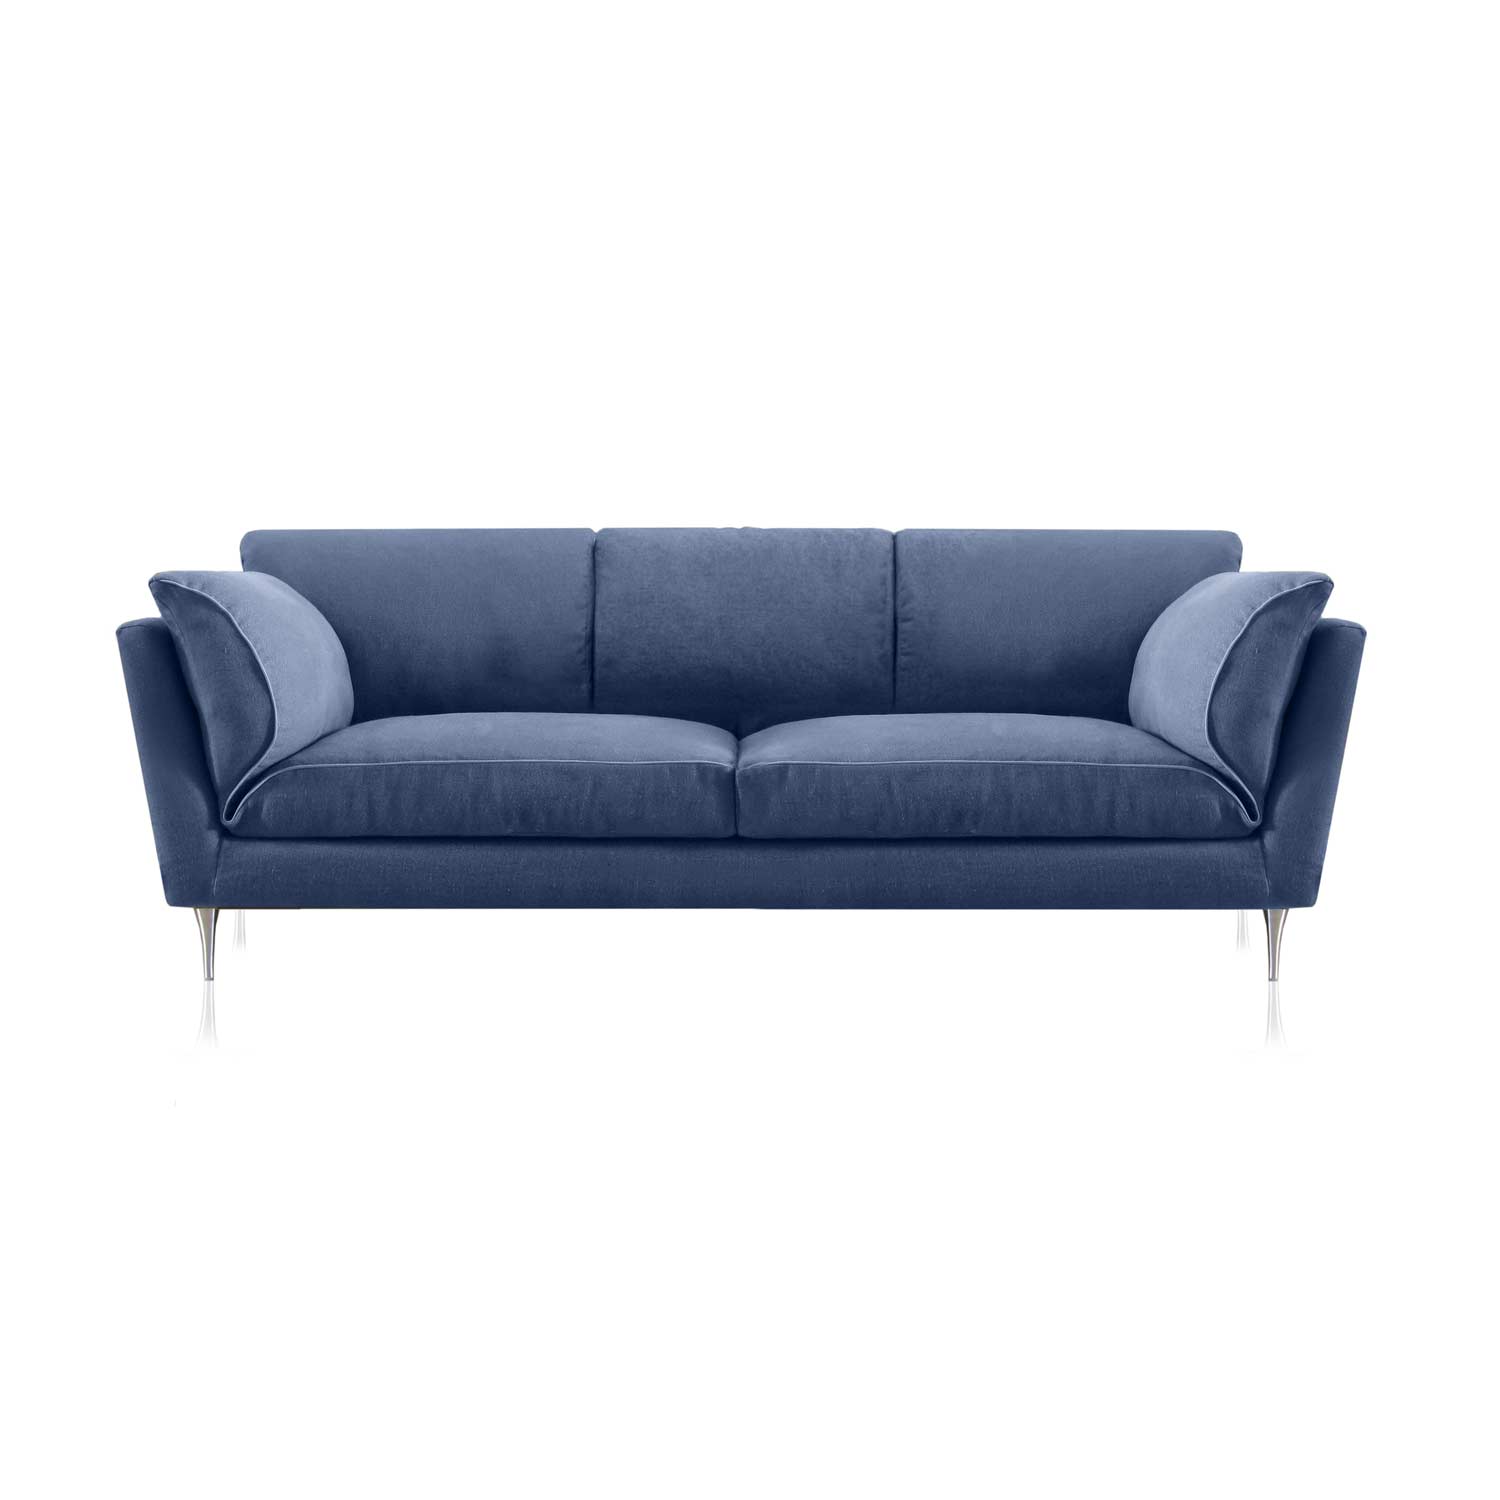 Stylish and Comfortable Sofa Design